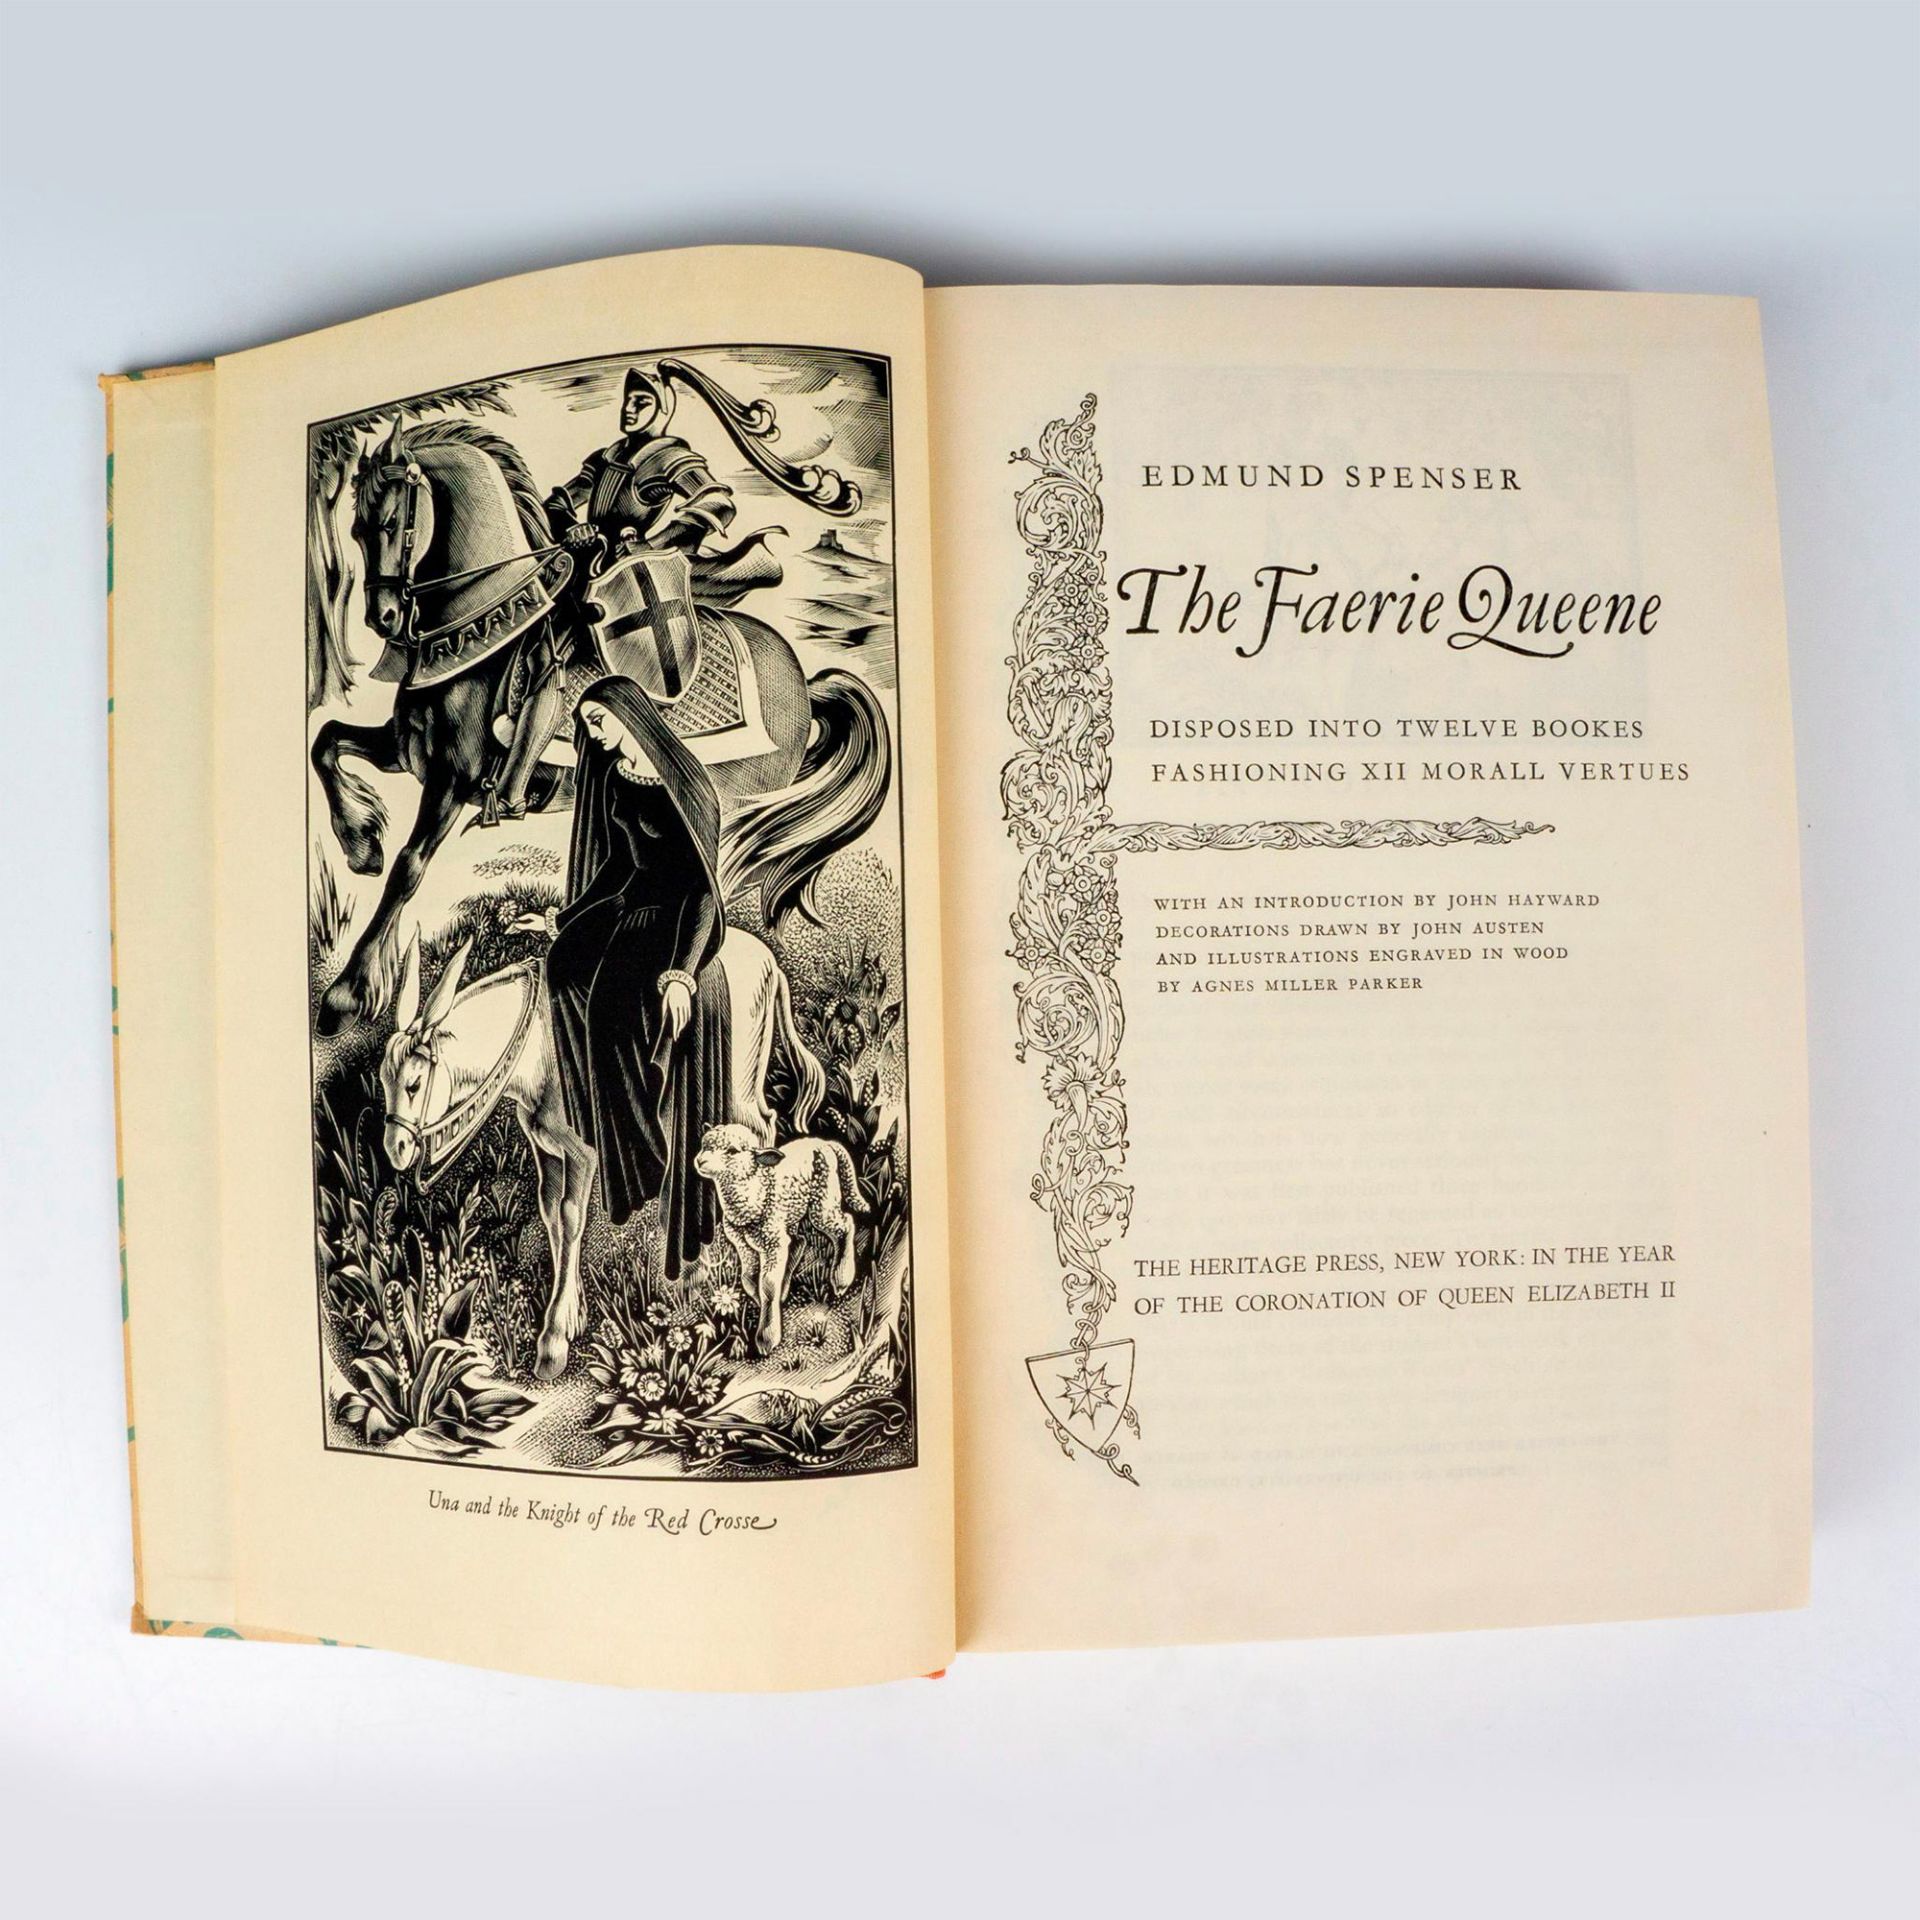 The Faerie Queene, Book by Edmund Spenser - Image 3 of 4